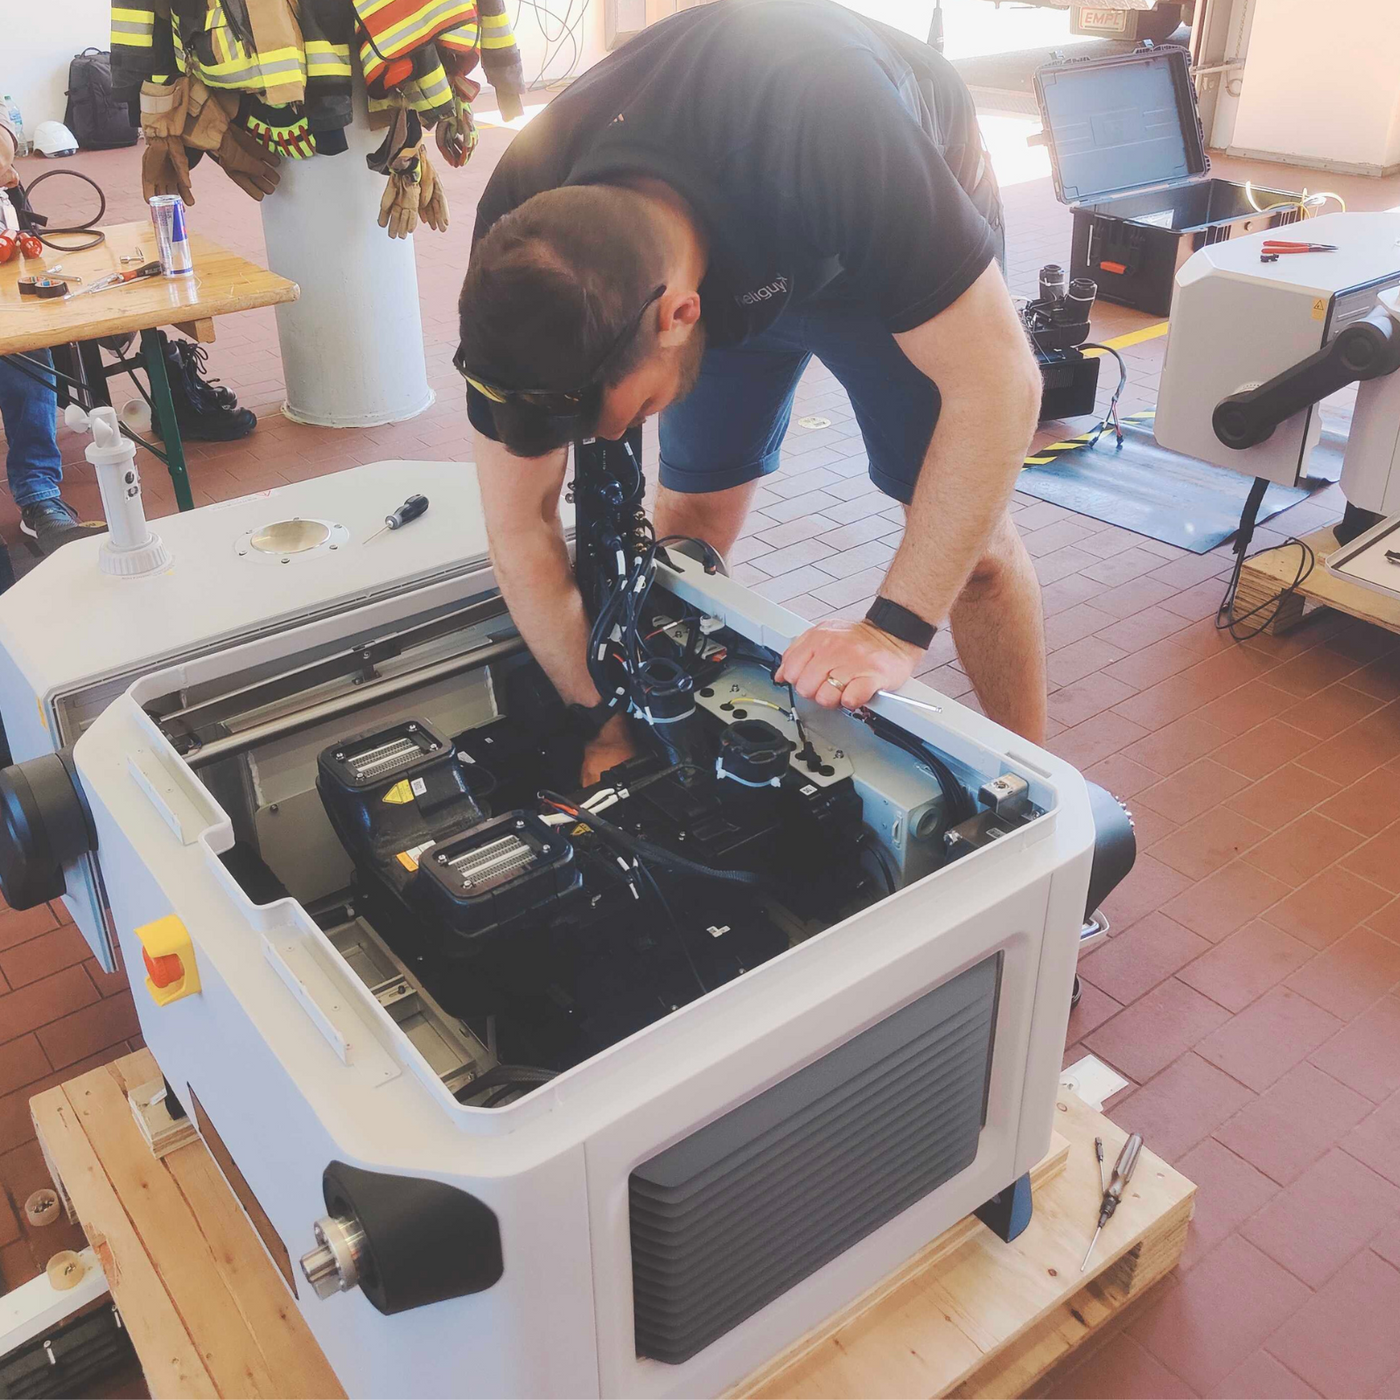 Heliguy completes DJI Dock maintenance training